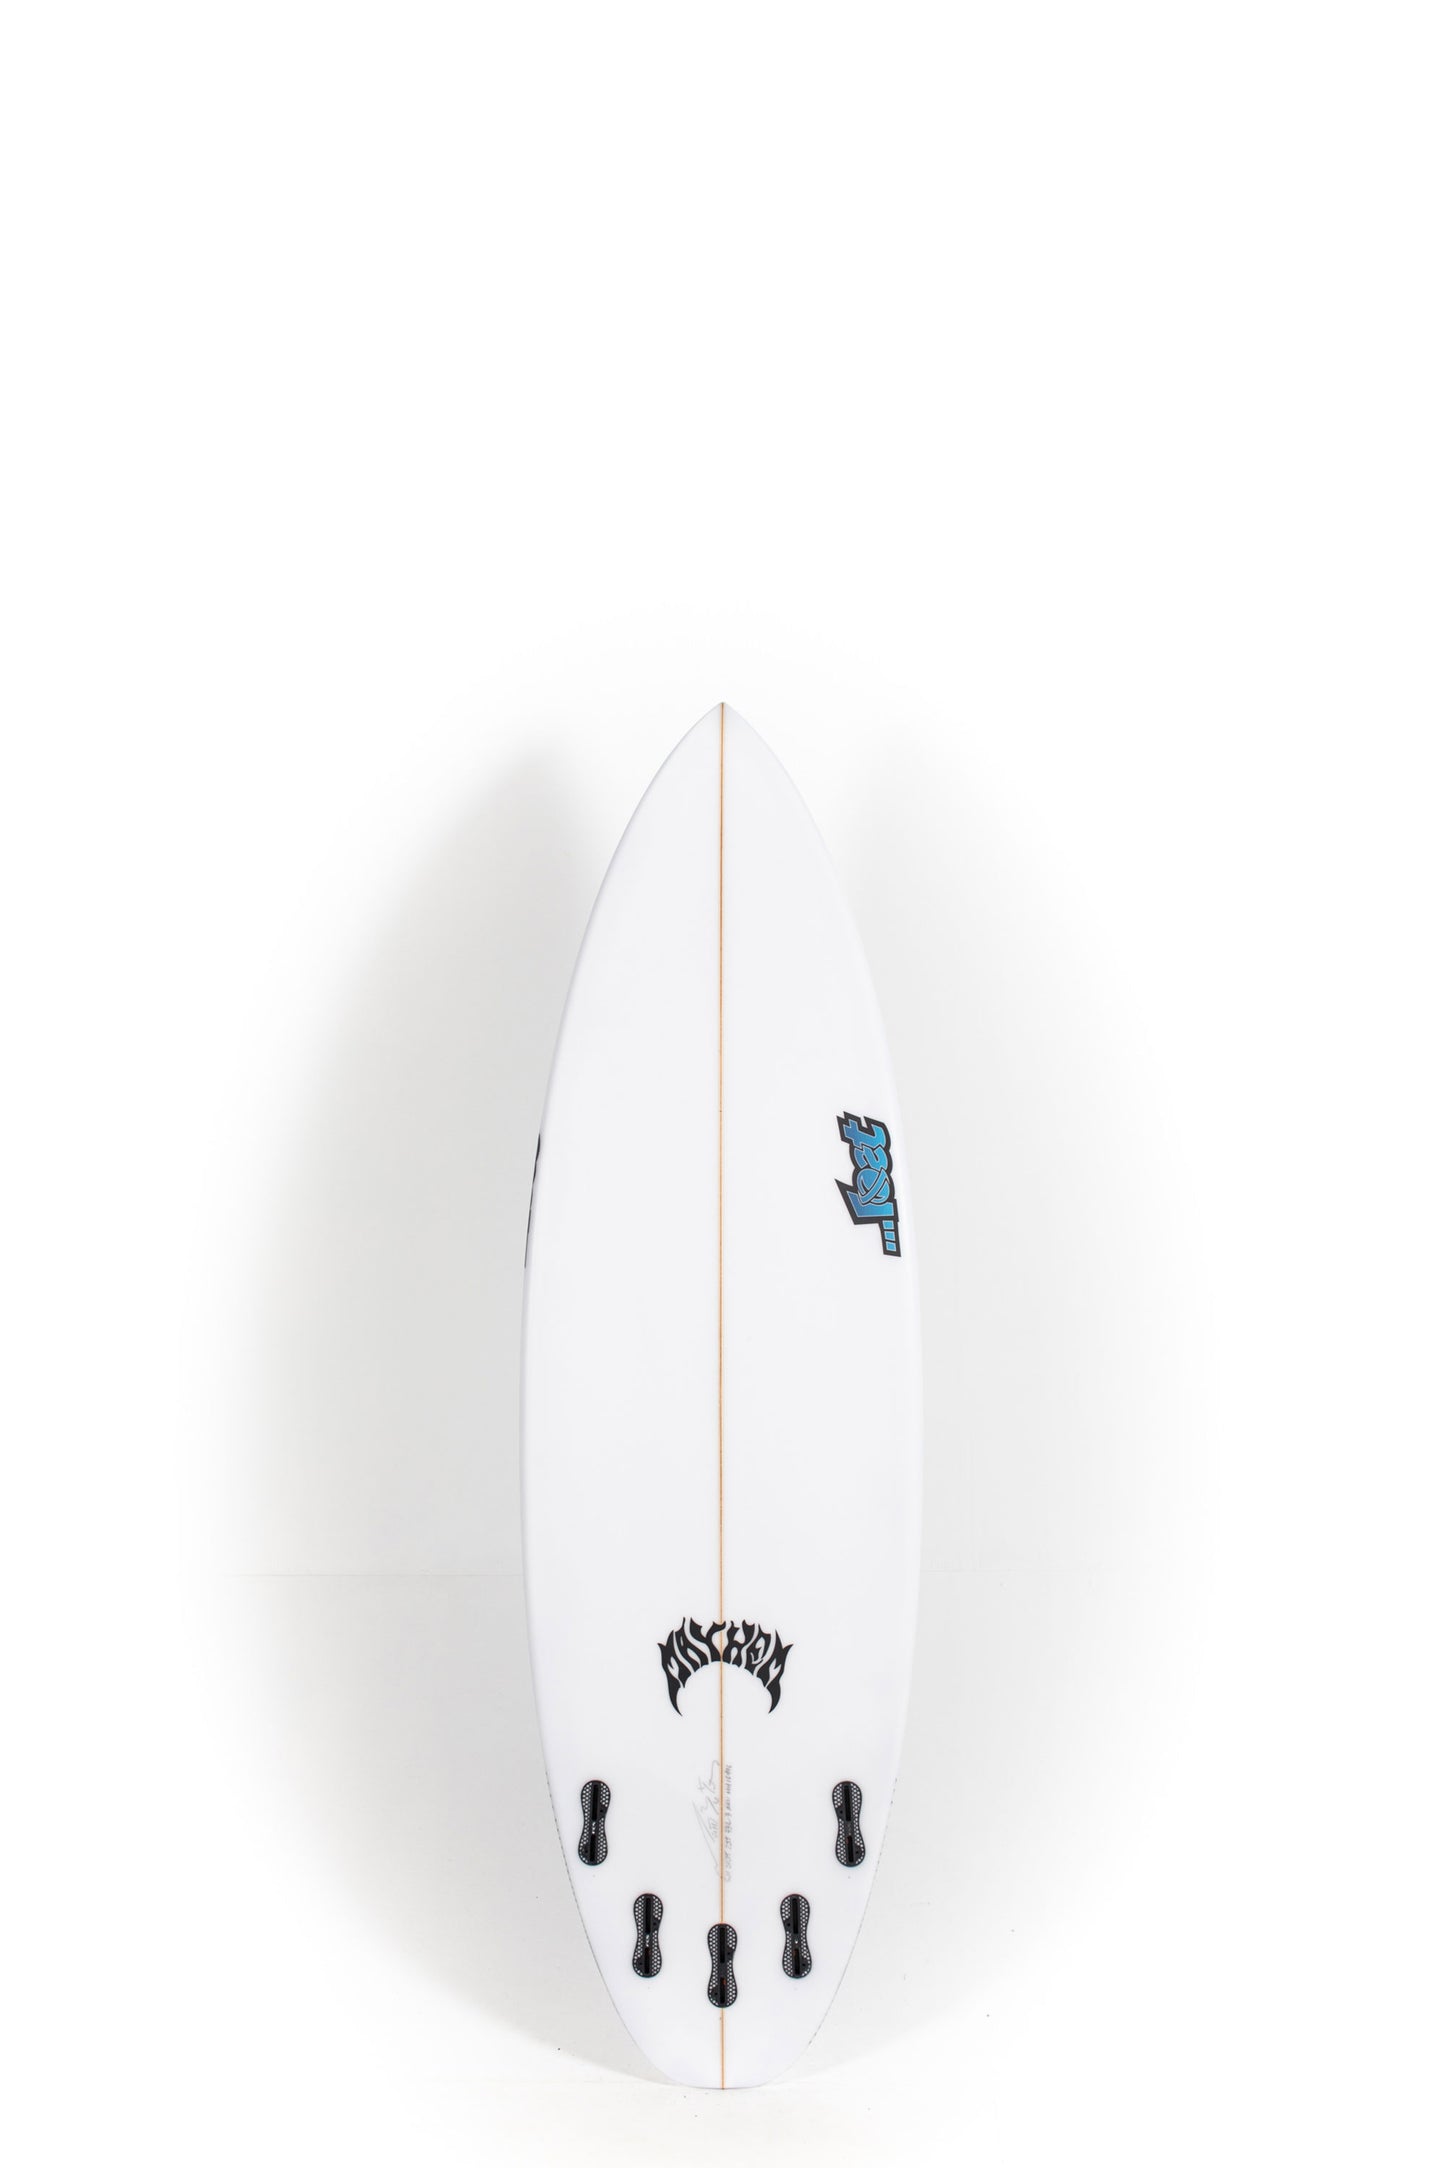 Pukas Surf Shop - Lost Surfboard - PUDDLE JUMPER-PRO by Matt Biolos - 5'11" x 20,25 x 2.55 x 33L - MH16496